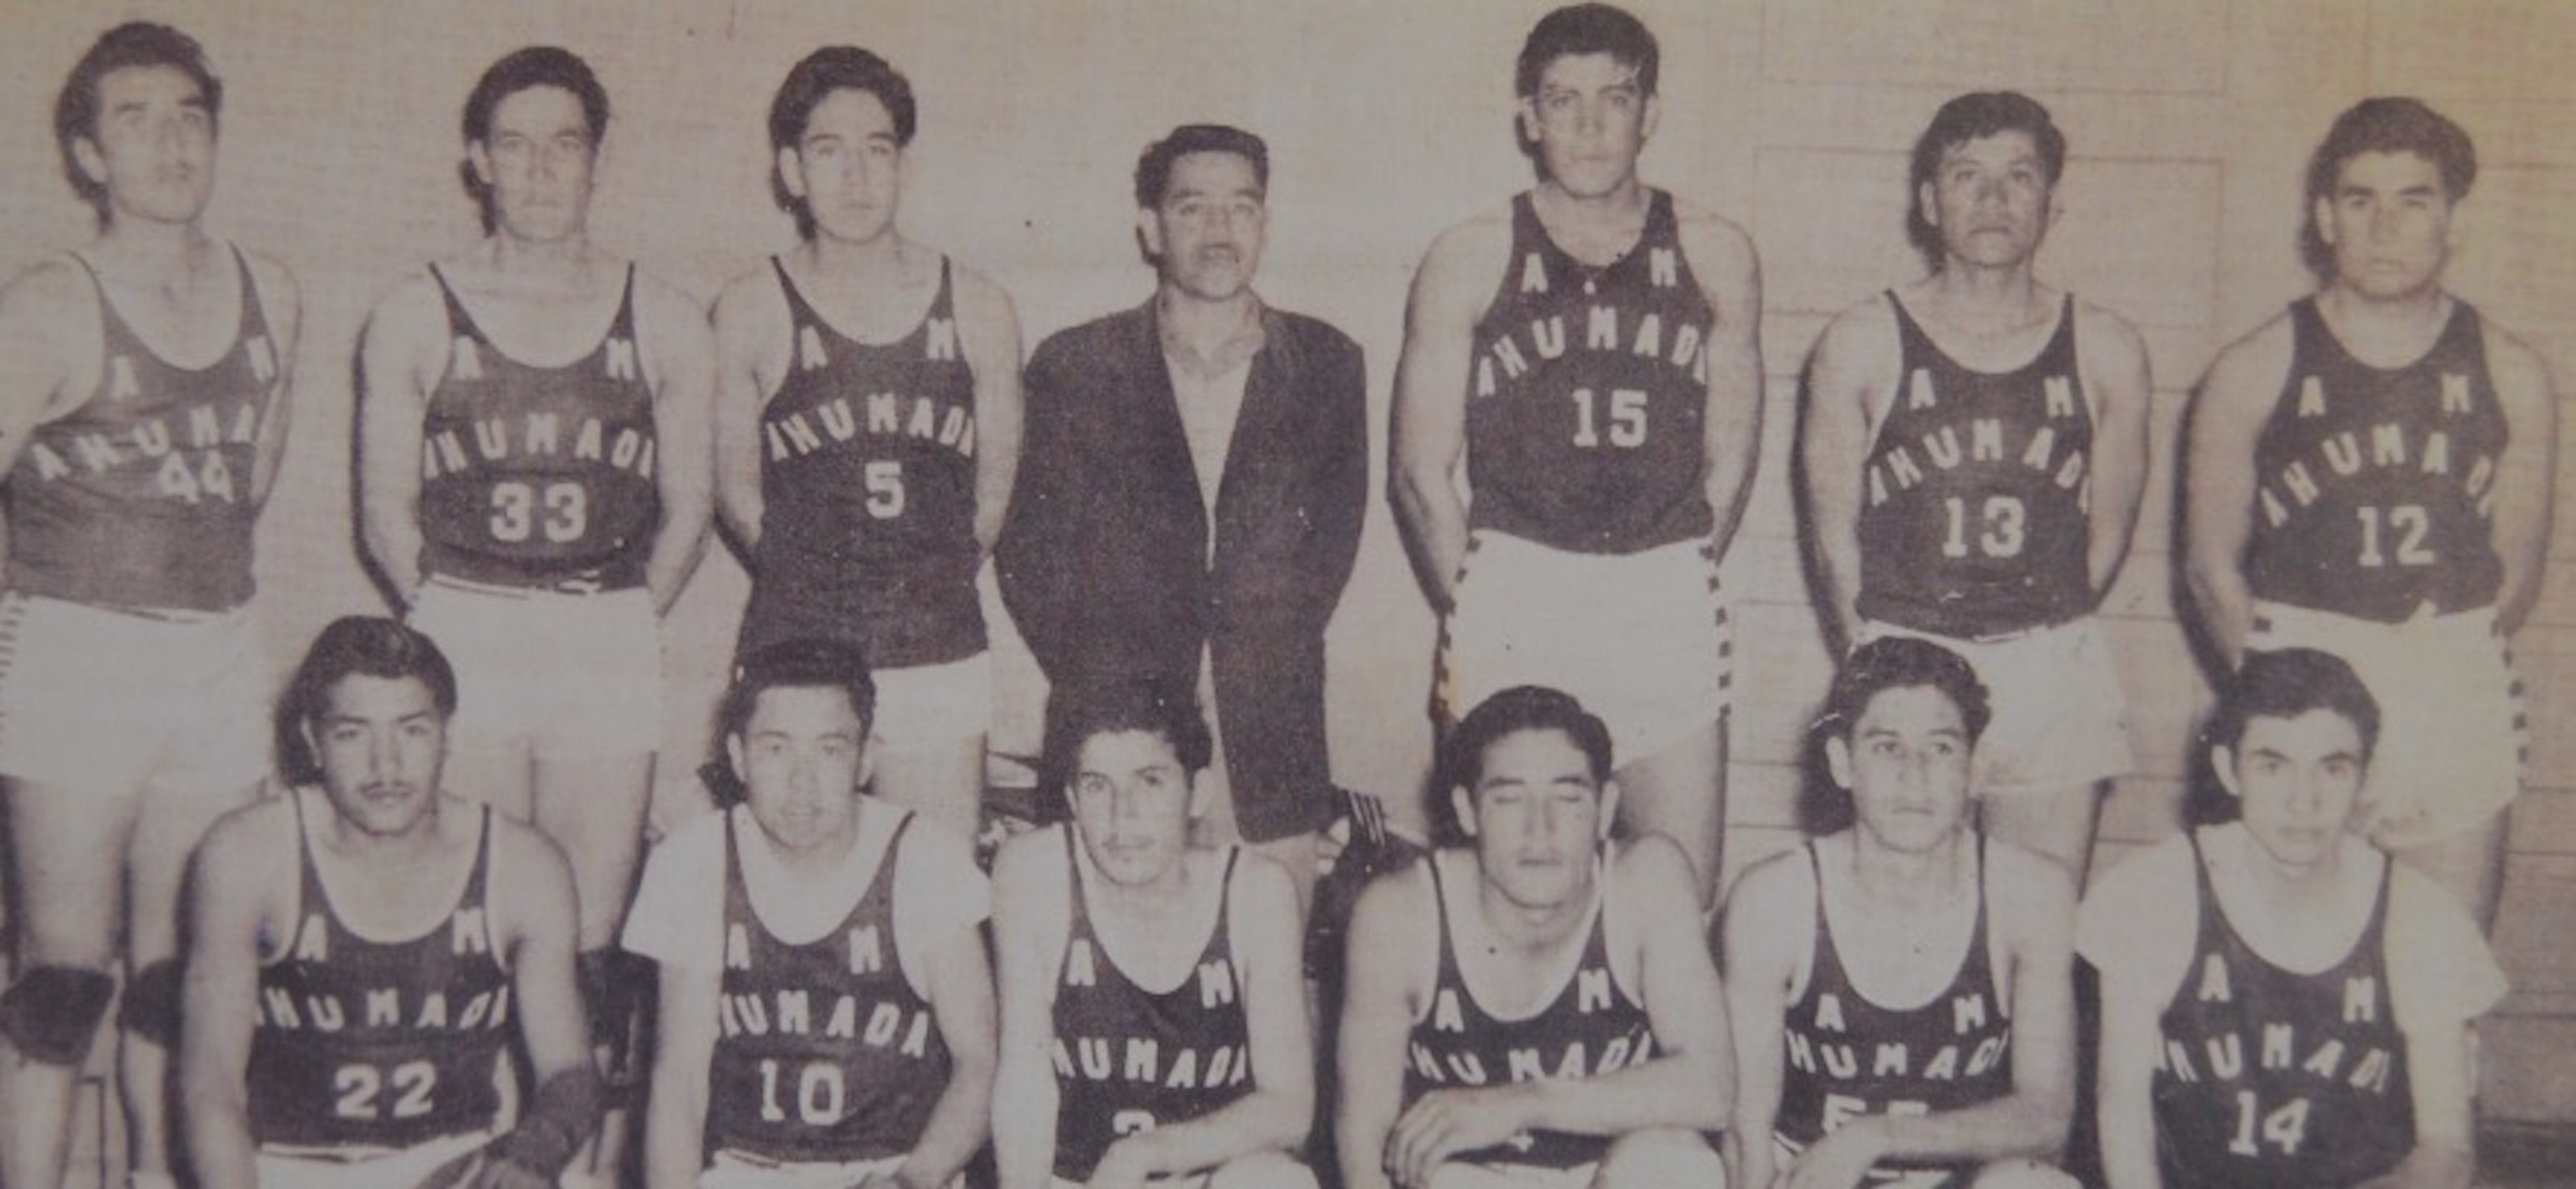 Equipo de Ahumada,
aproximadamente 1958